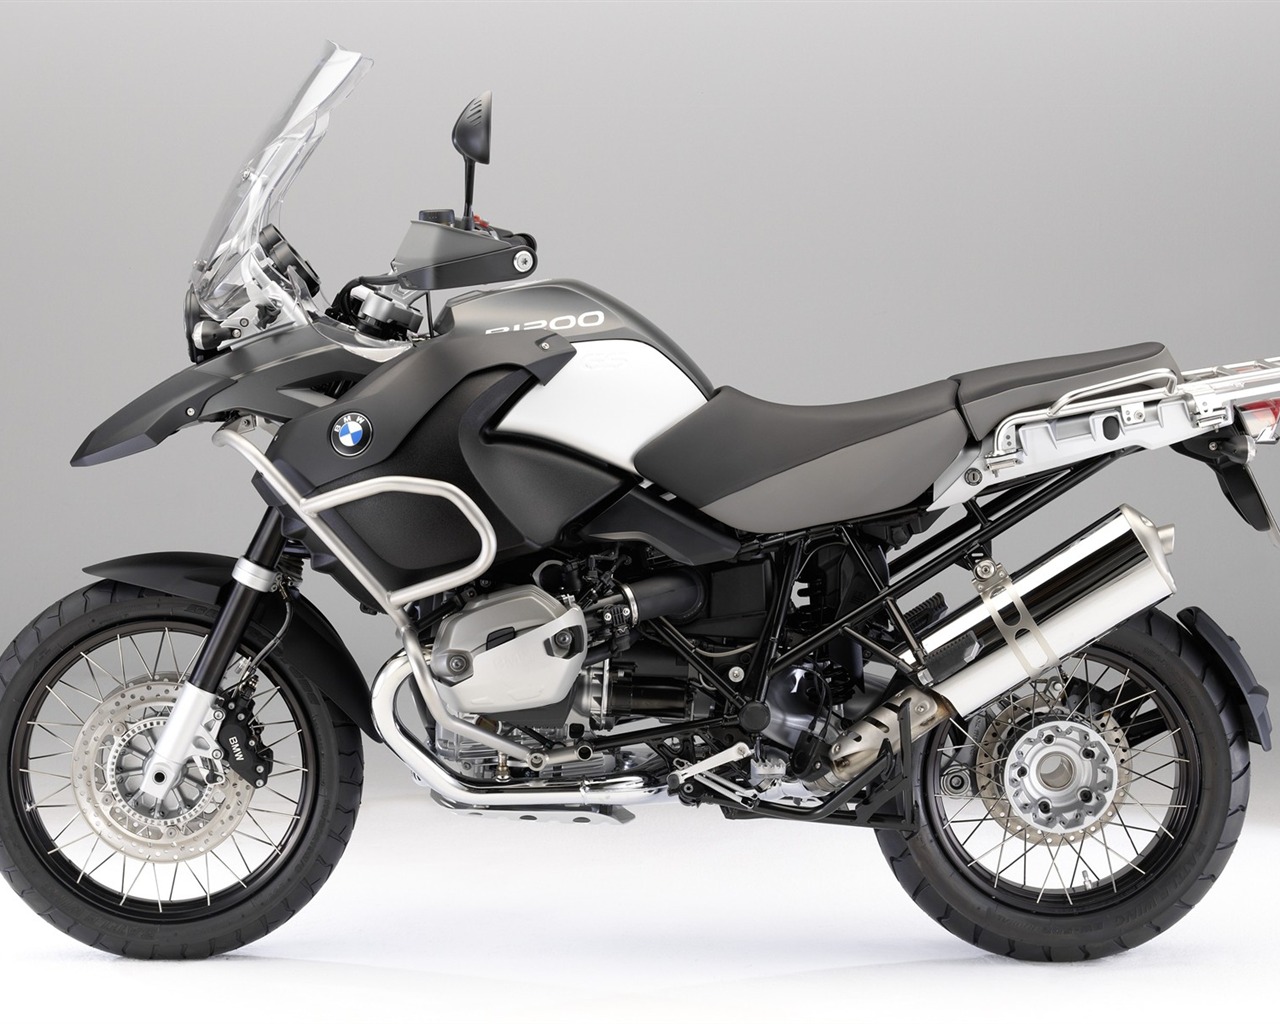 2010 fondos de pantalla de la motocicleta BMW #27 - 1280x1024